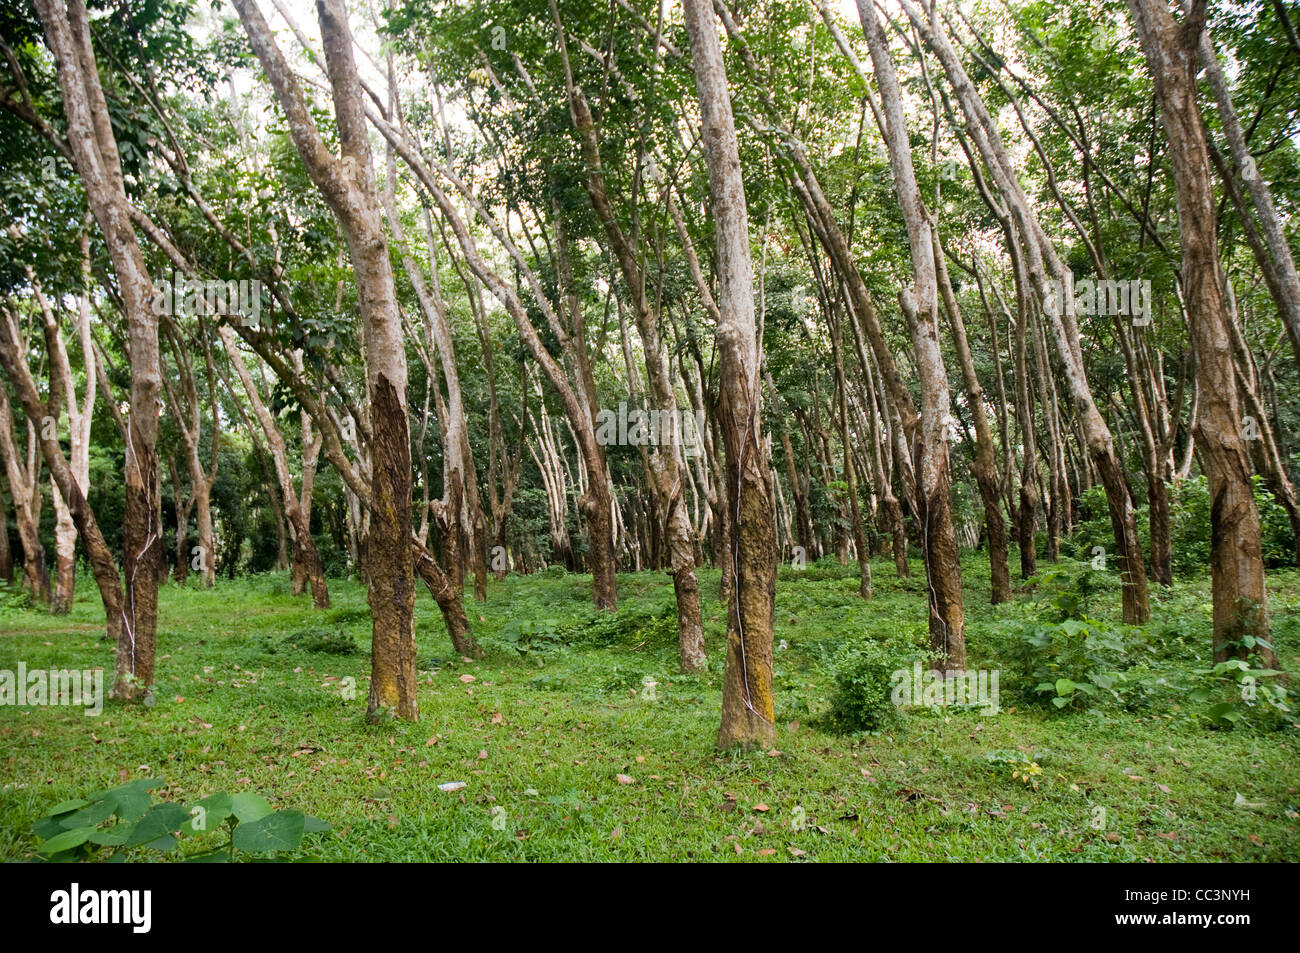 Natural rubber plantation in Sri Lanka. Stock Photo